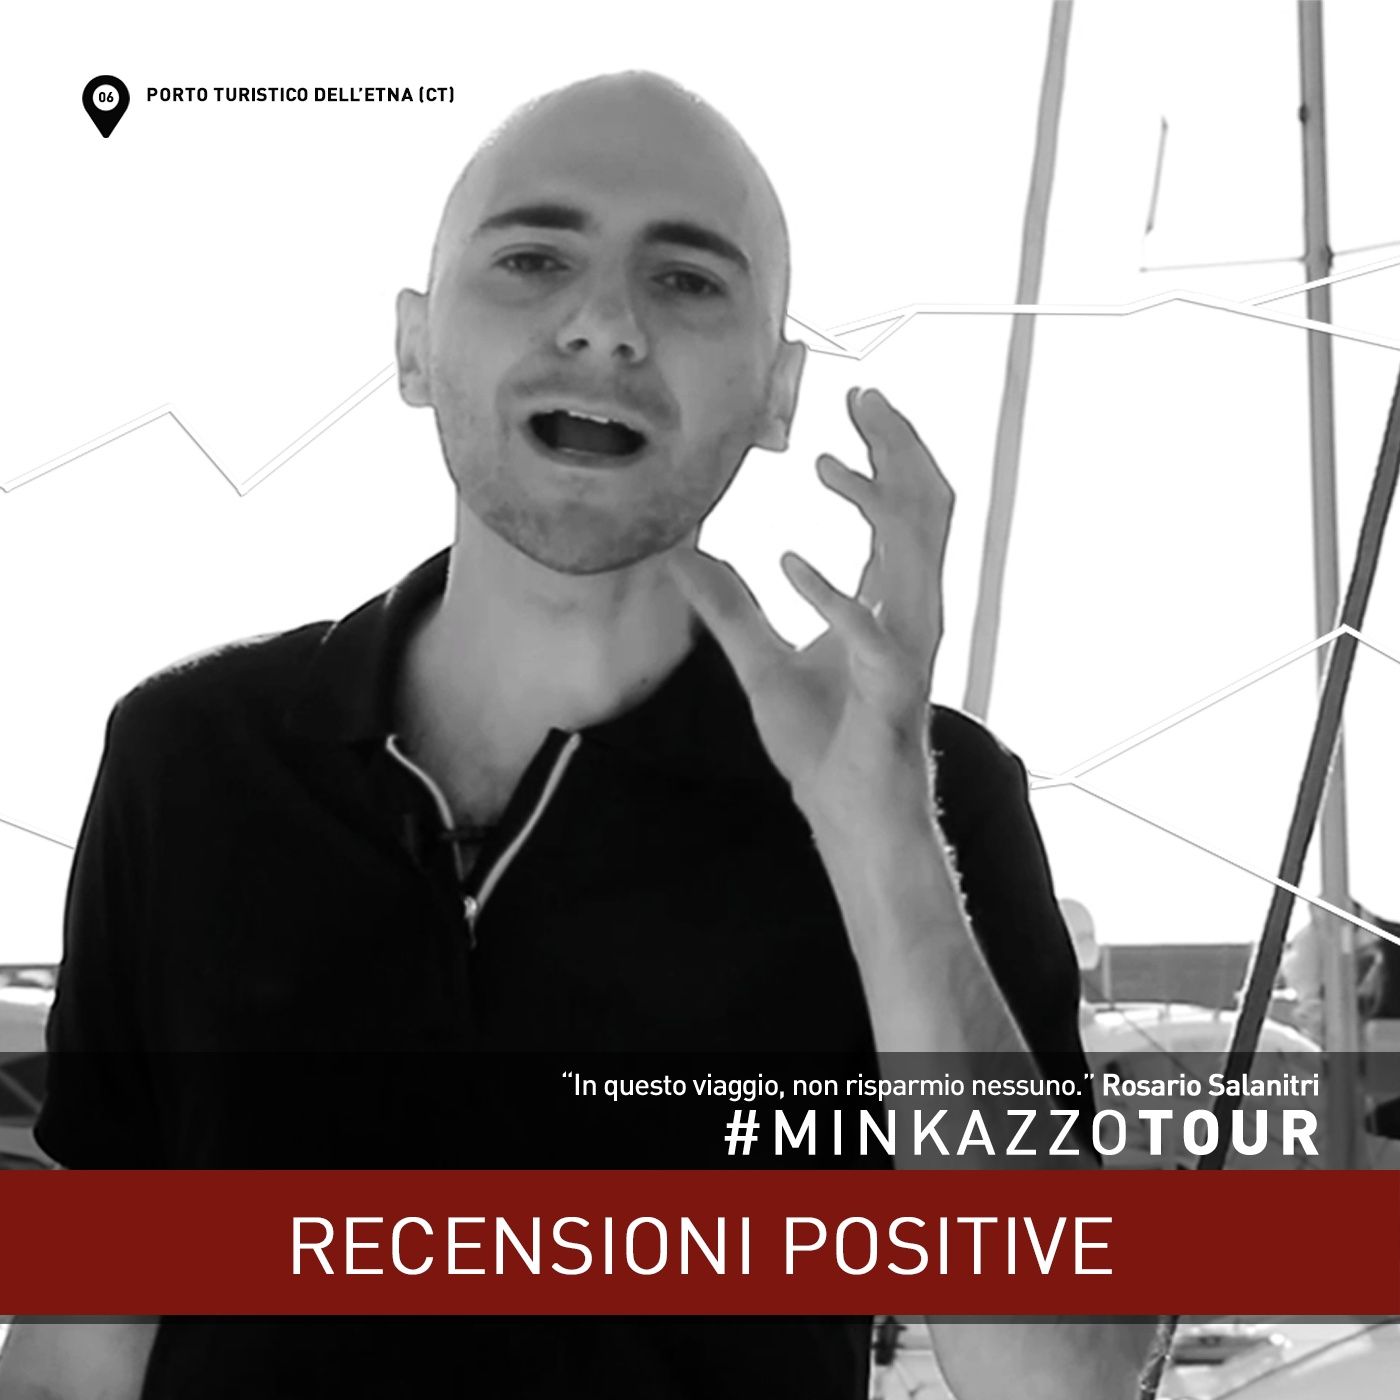 #06 - Recensioni positive - Pensaci. #MINKAZZOTOUR